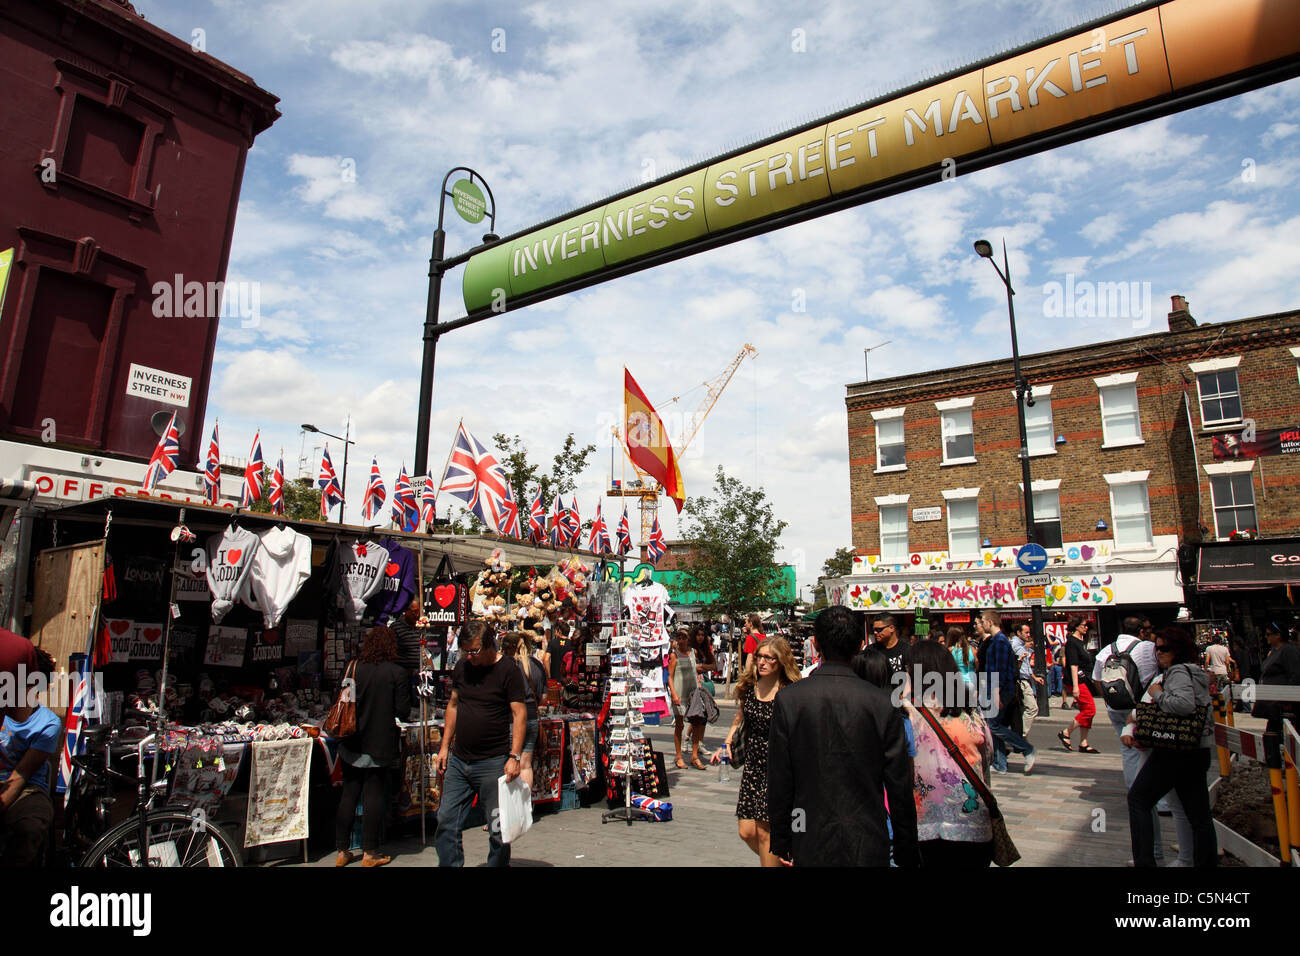 Inverness Street Market, Camden Town, London, England, U.K. Stock Photo